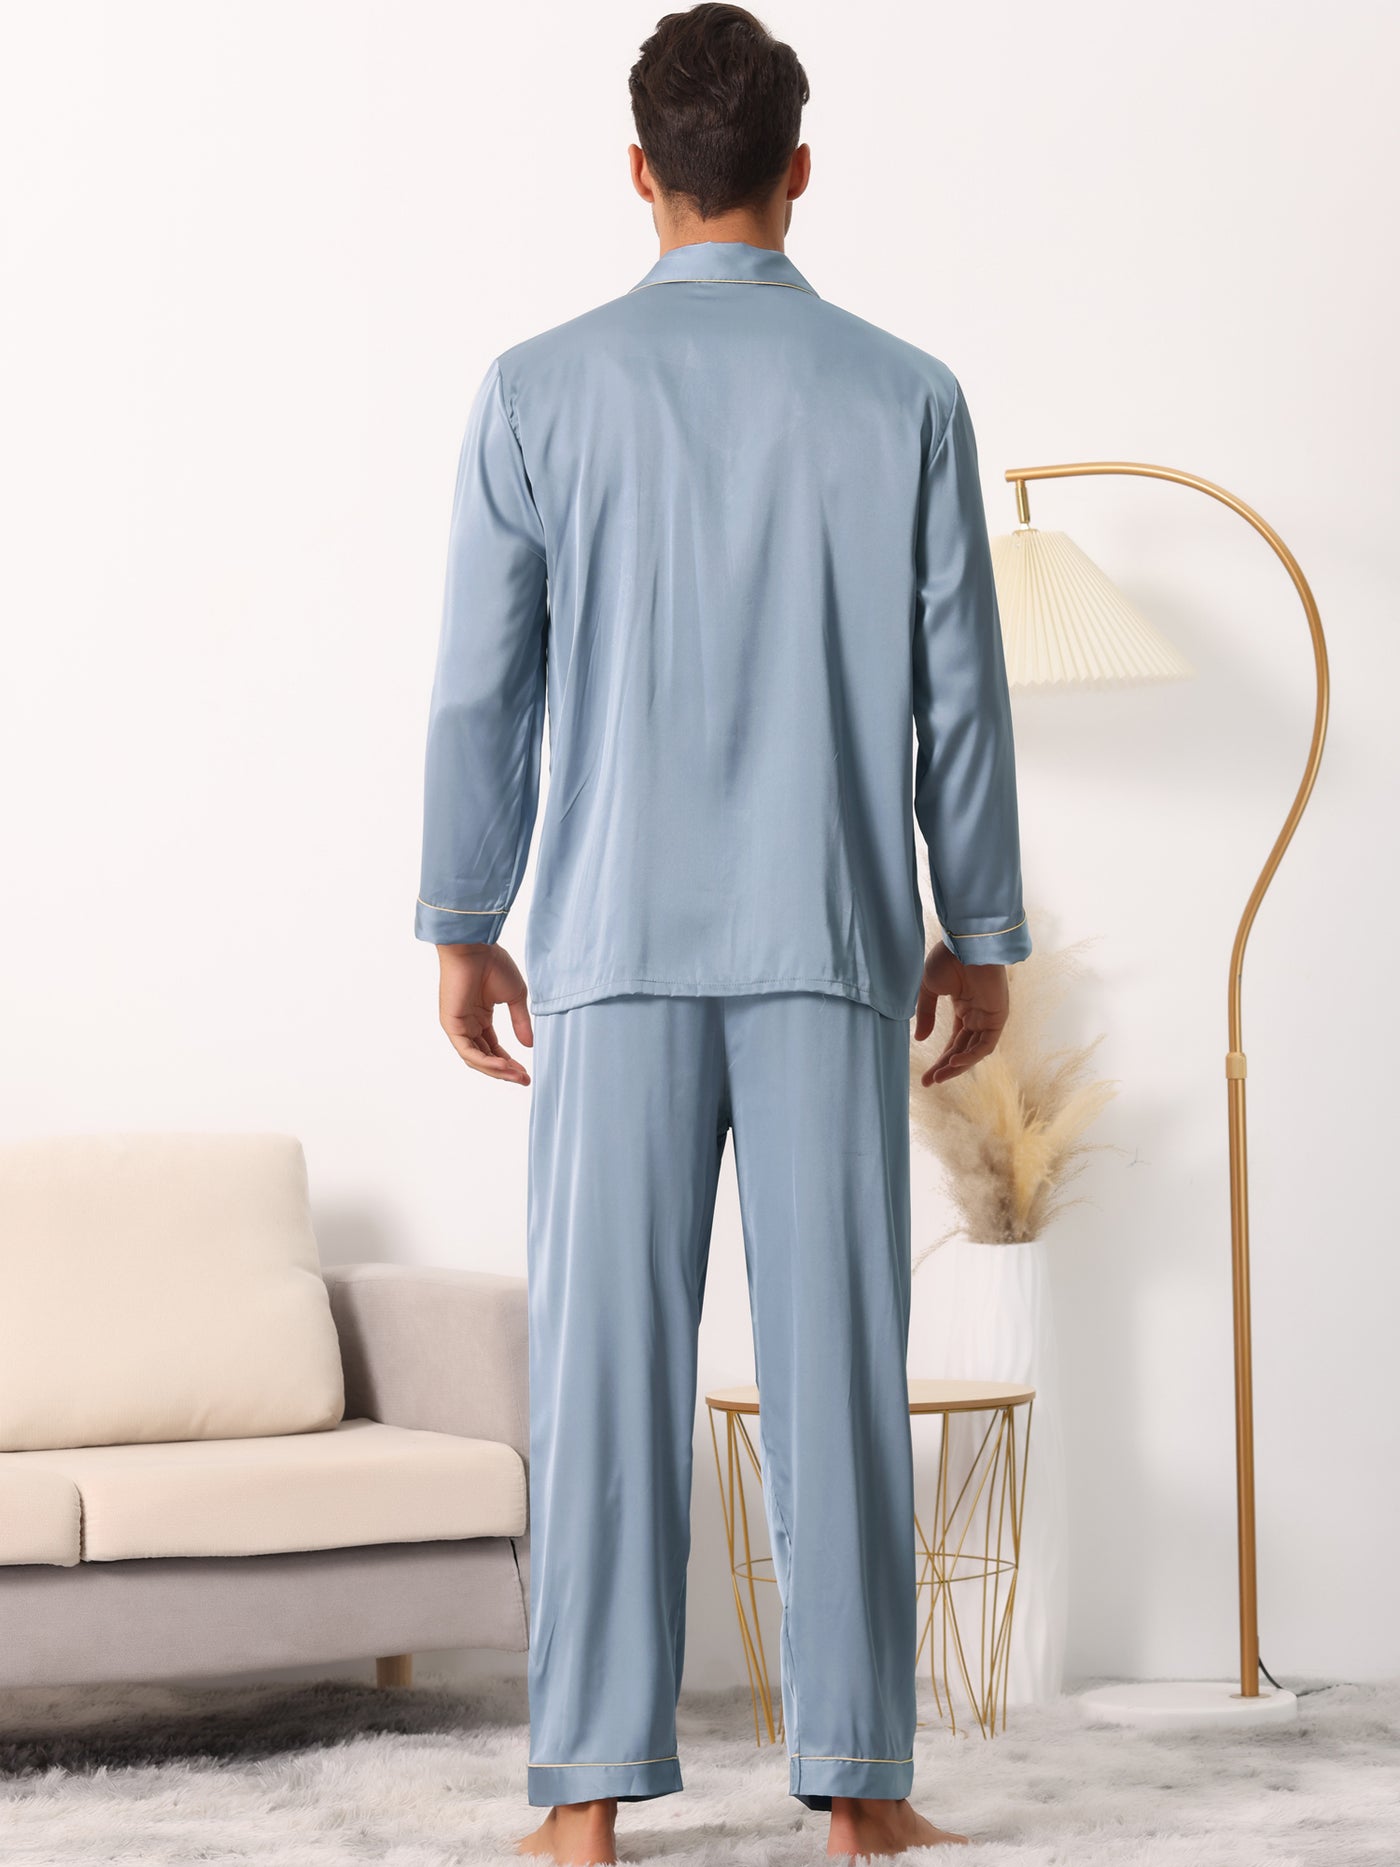 Bublédon Men's Sleepwear Long Sleeve Button Down Shirt Pants Matching Couple Pajama Sets